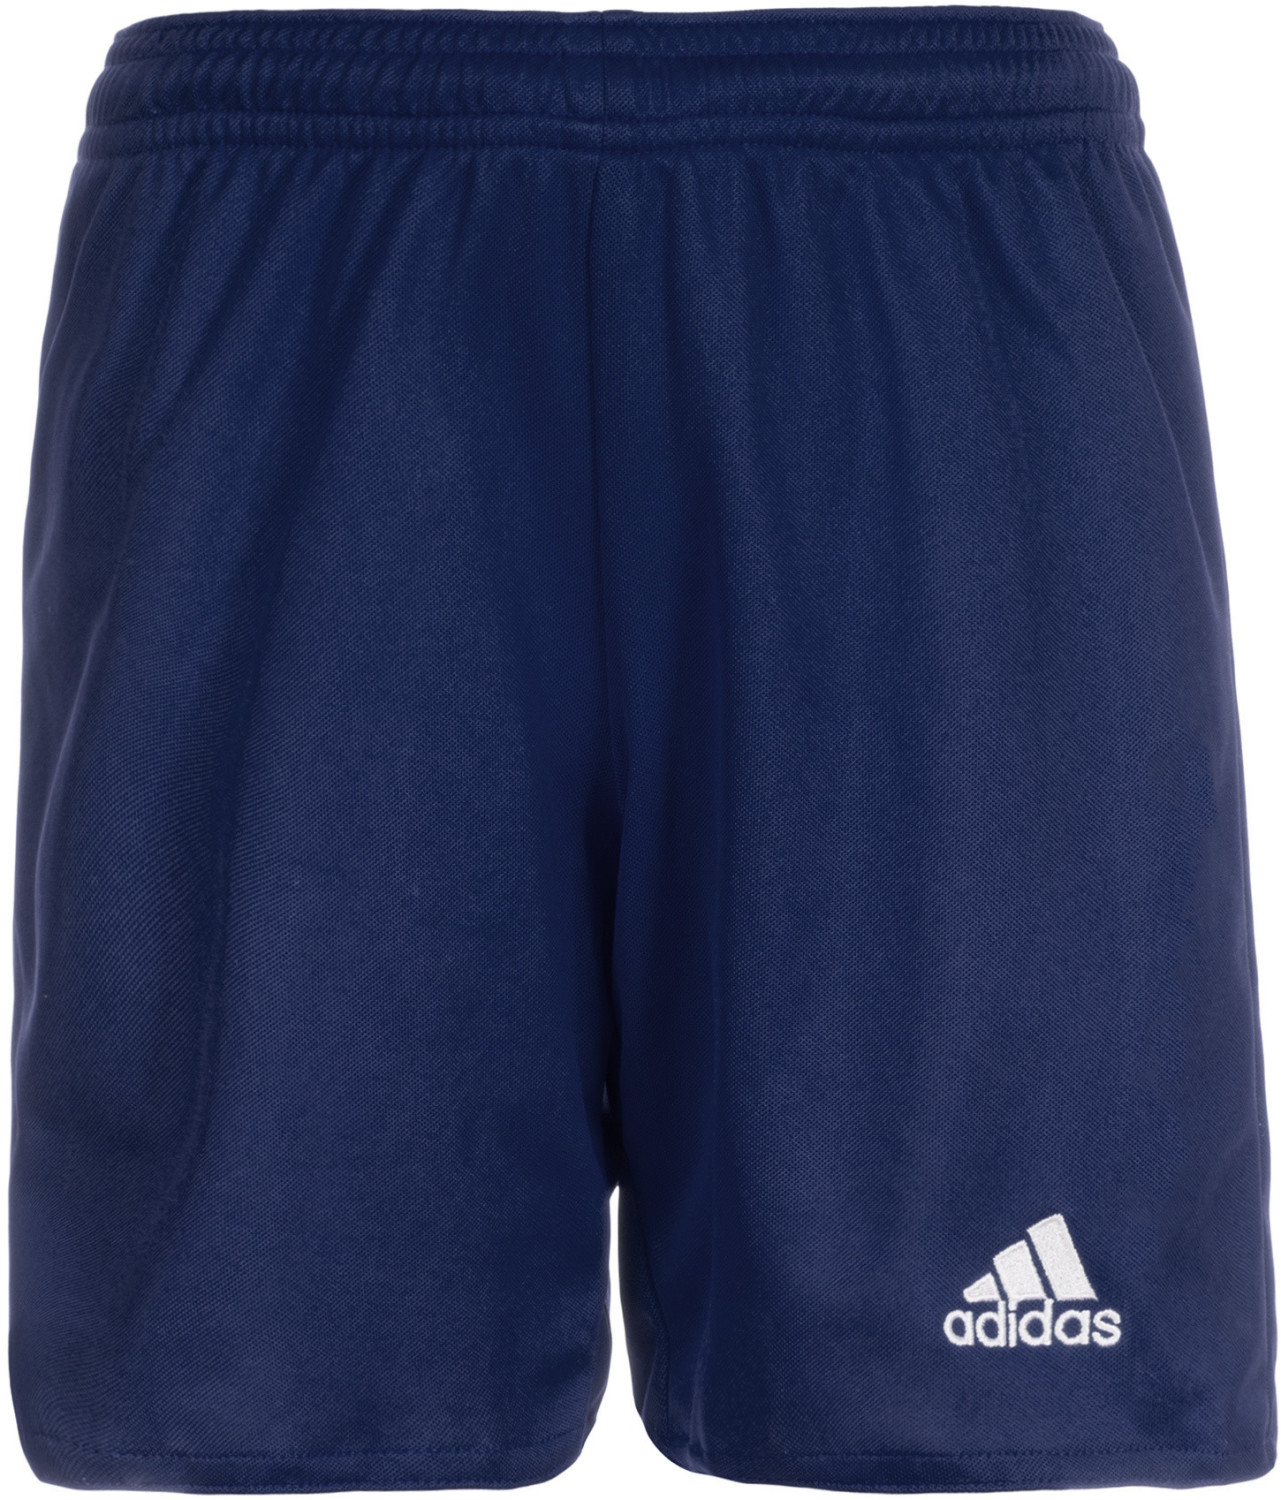 Adidas Parma 16 Shorts (2019) Dark Blue / White